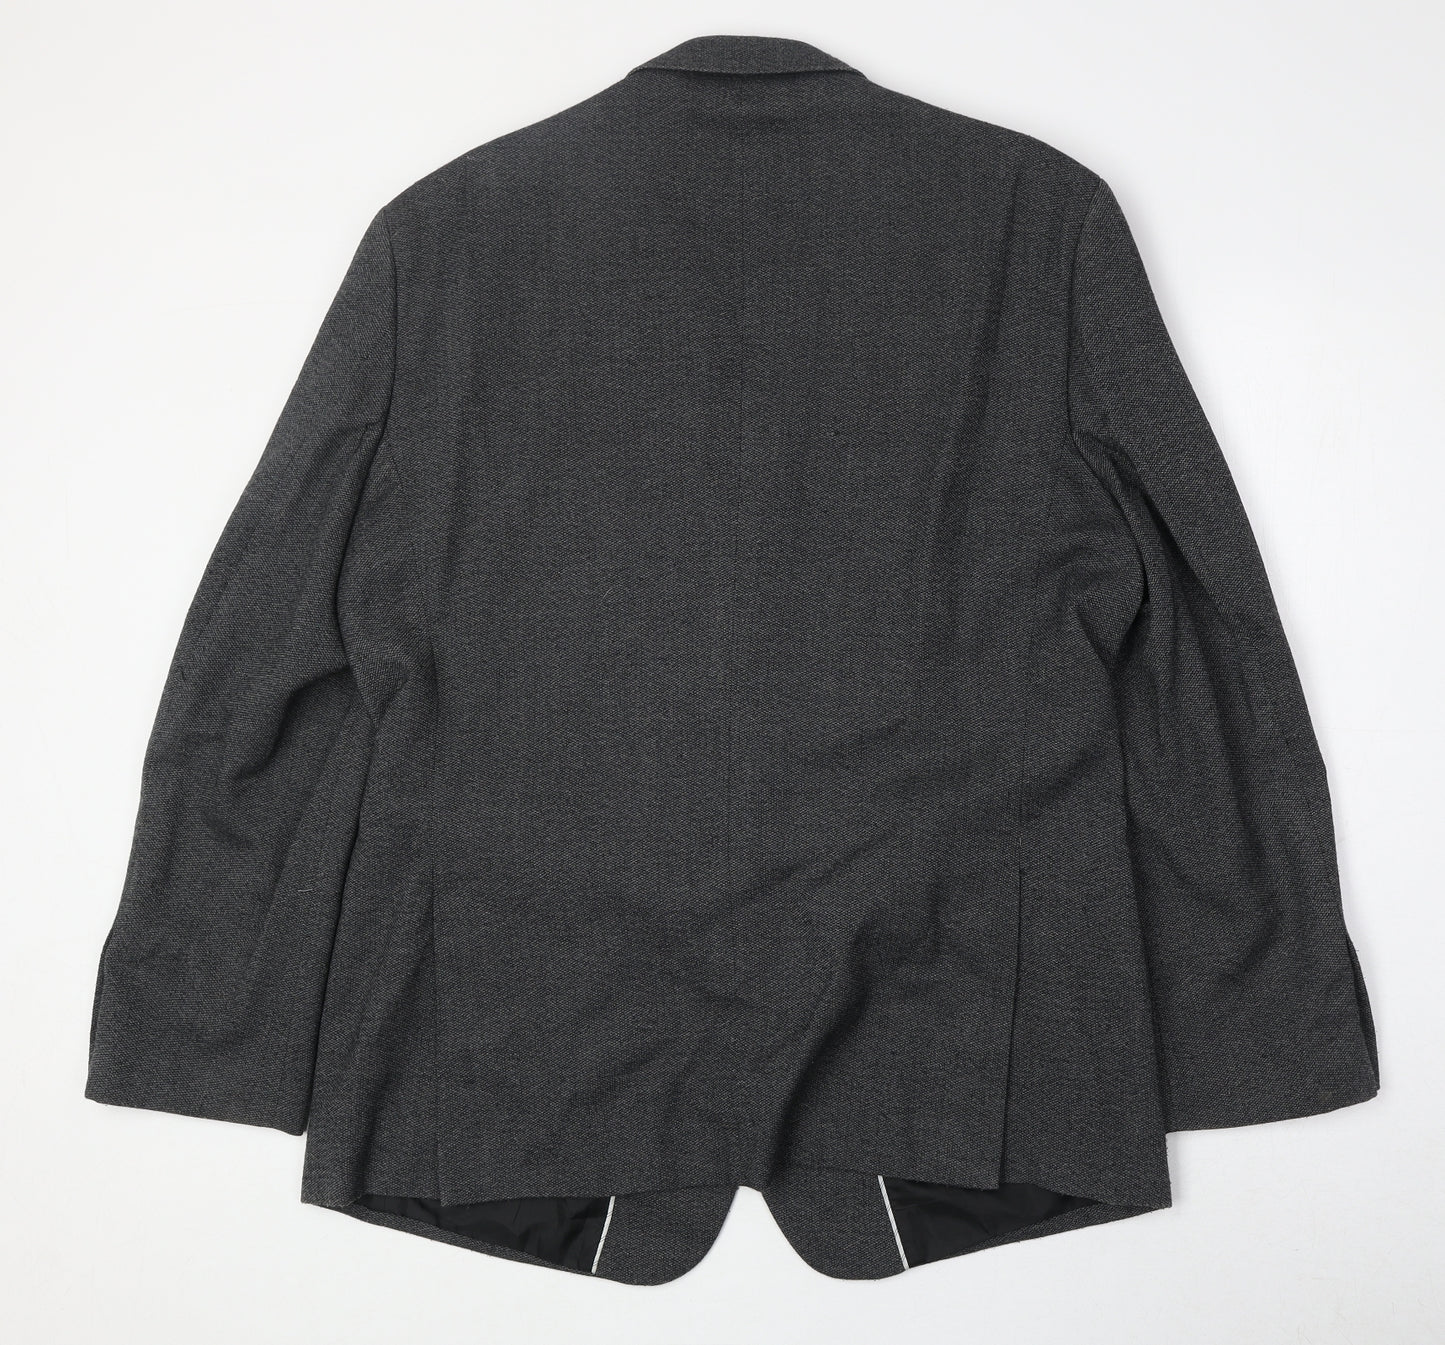 Charlton Gray Mens Grey Polyester Jacket Suit Jacket Size 44 Regular